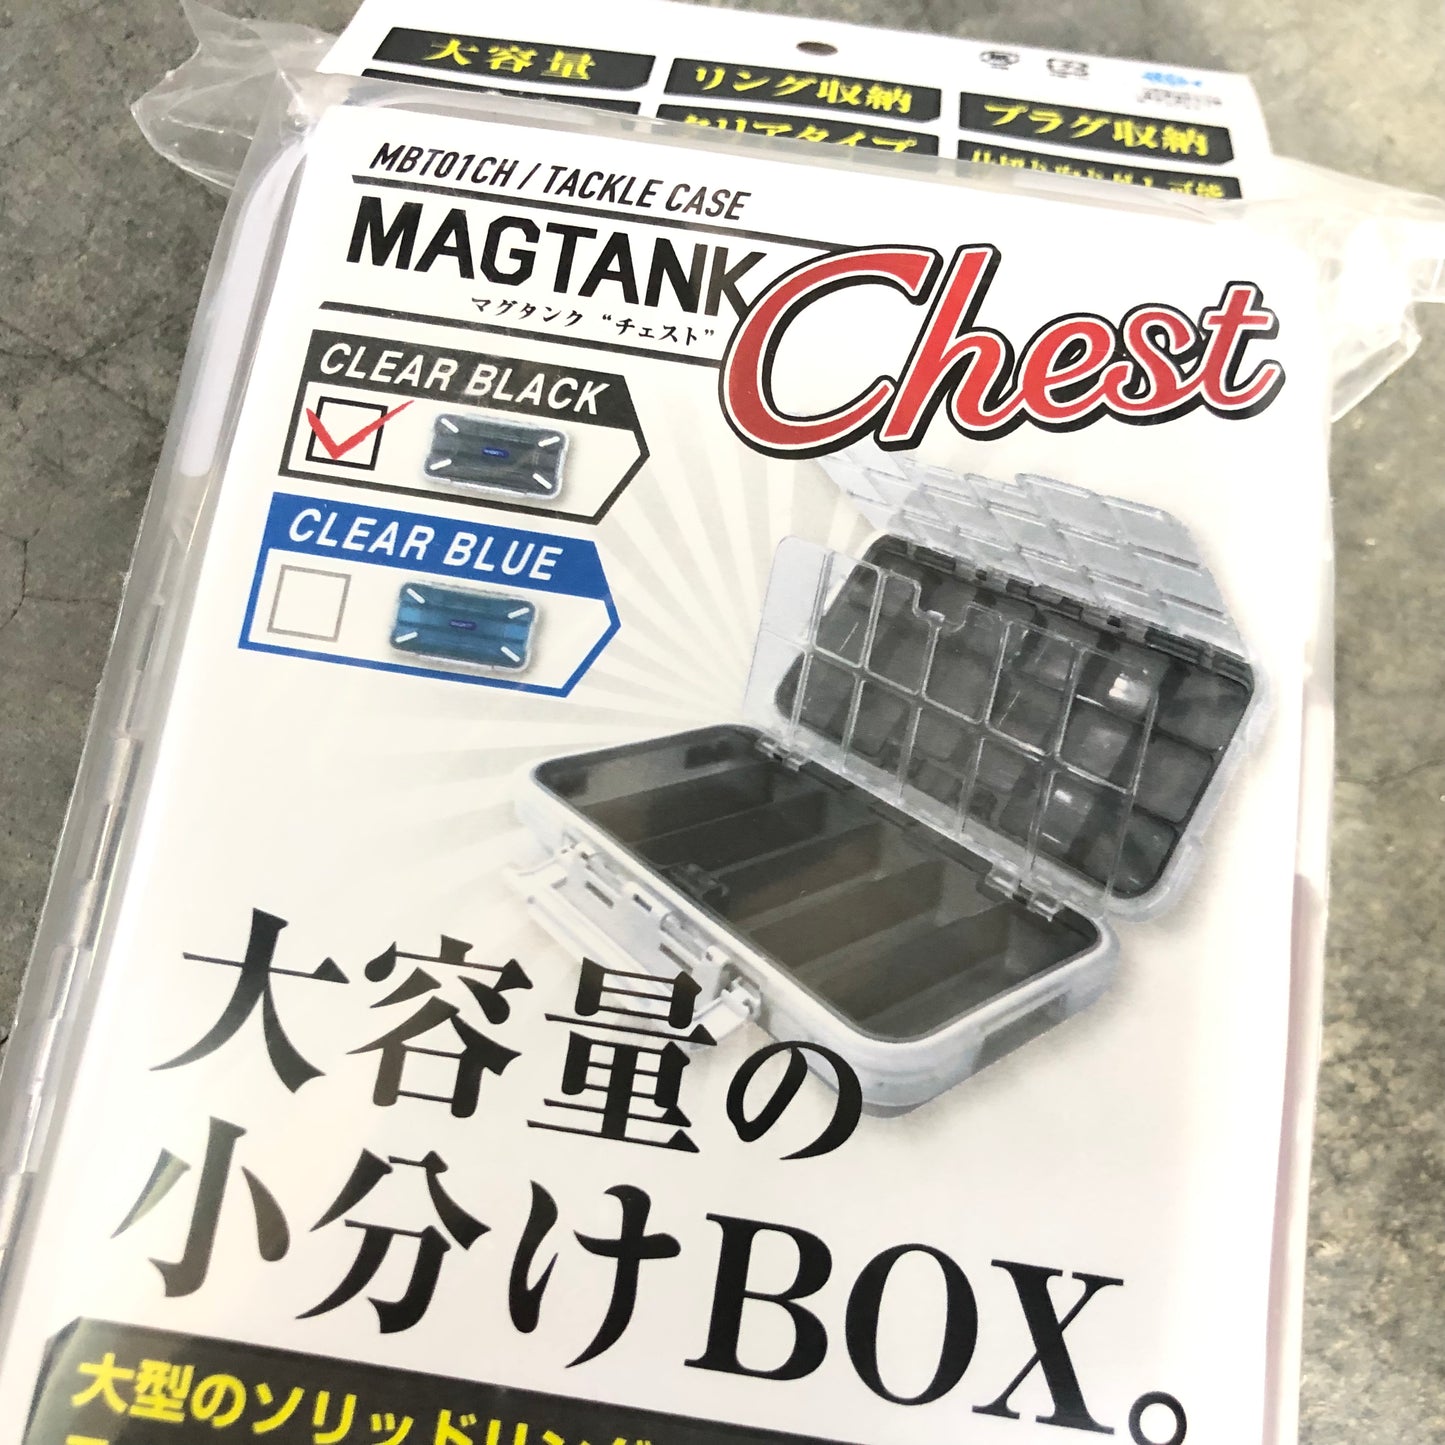 MBT01CH Magtank Chest XL